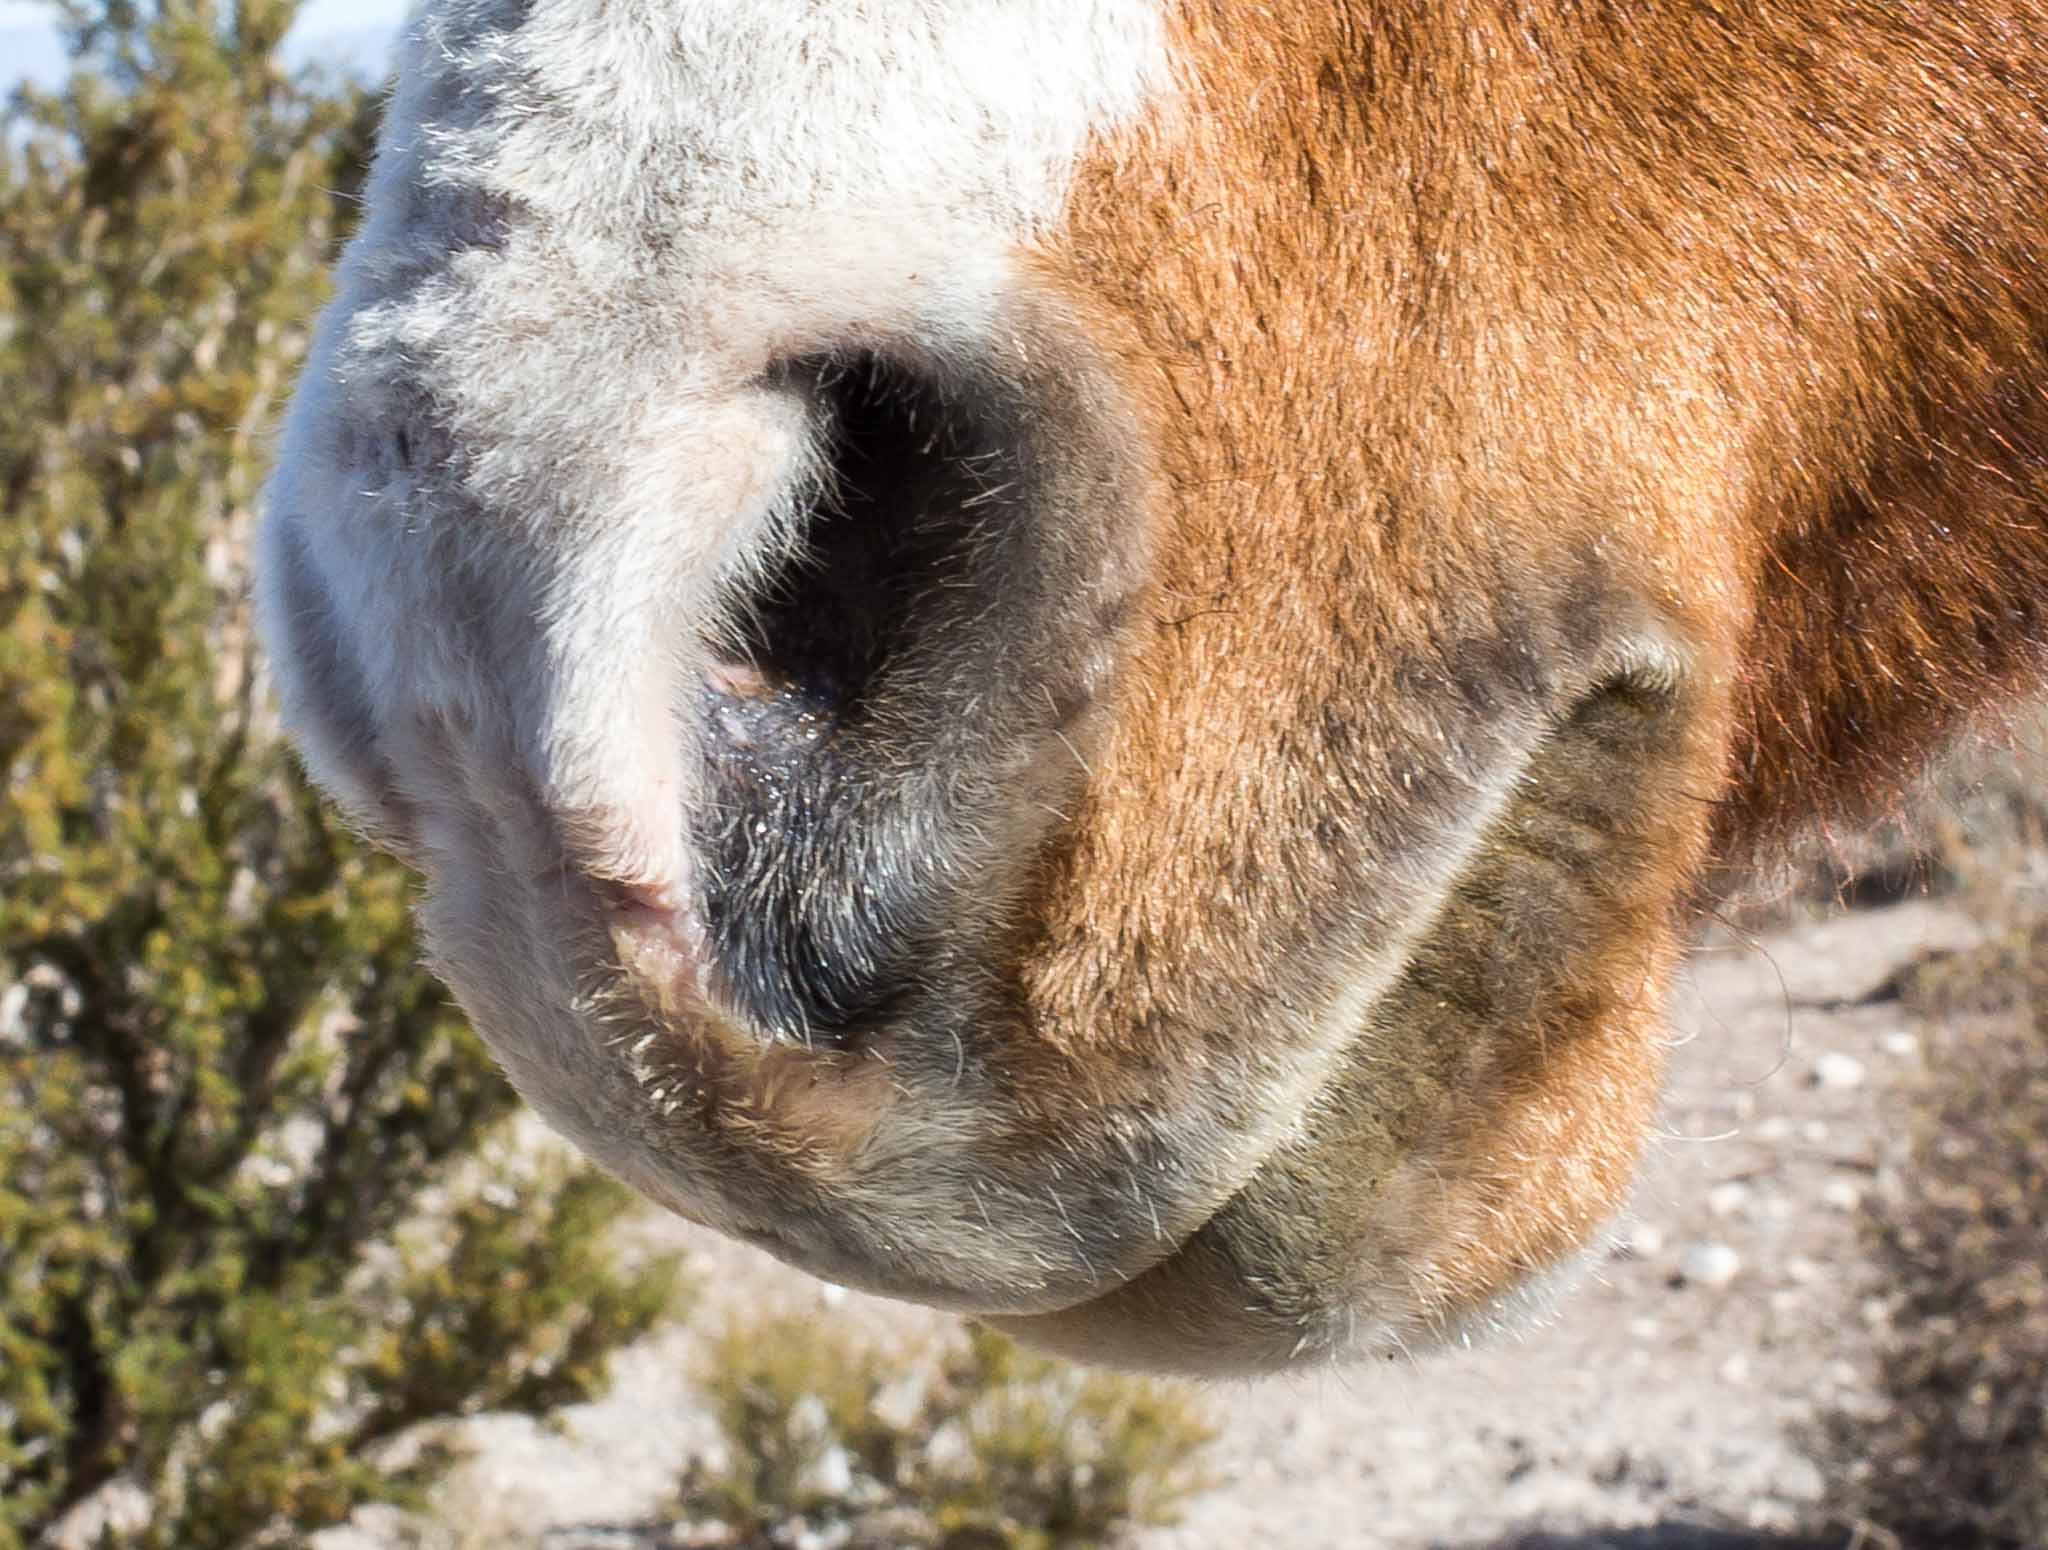 Horse nose, closeup of wild horse at Cold Creek NV, October 22, 2014